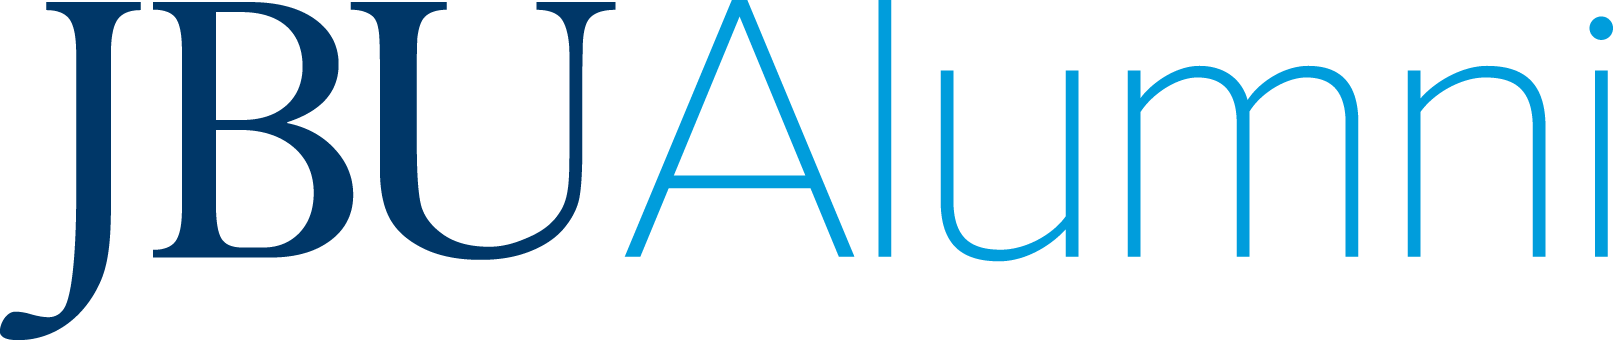 JBU Logo - Sub Branding - Logo - John Brown University